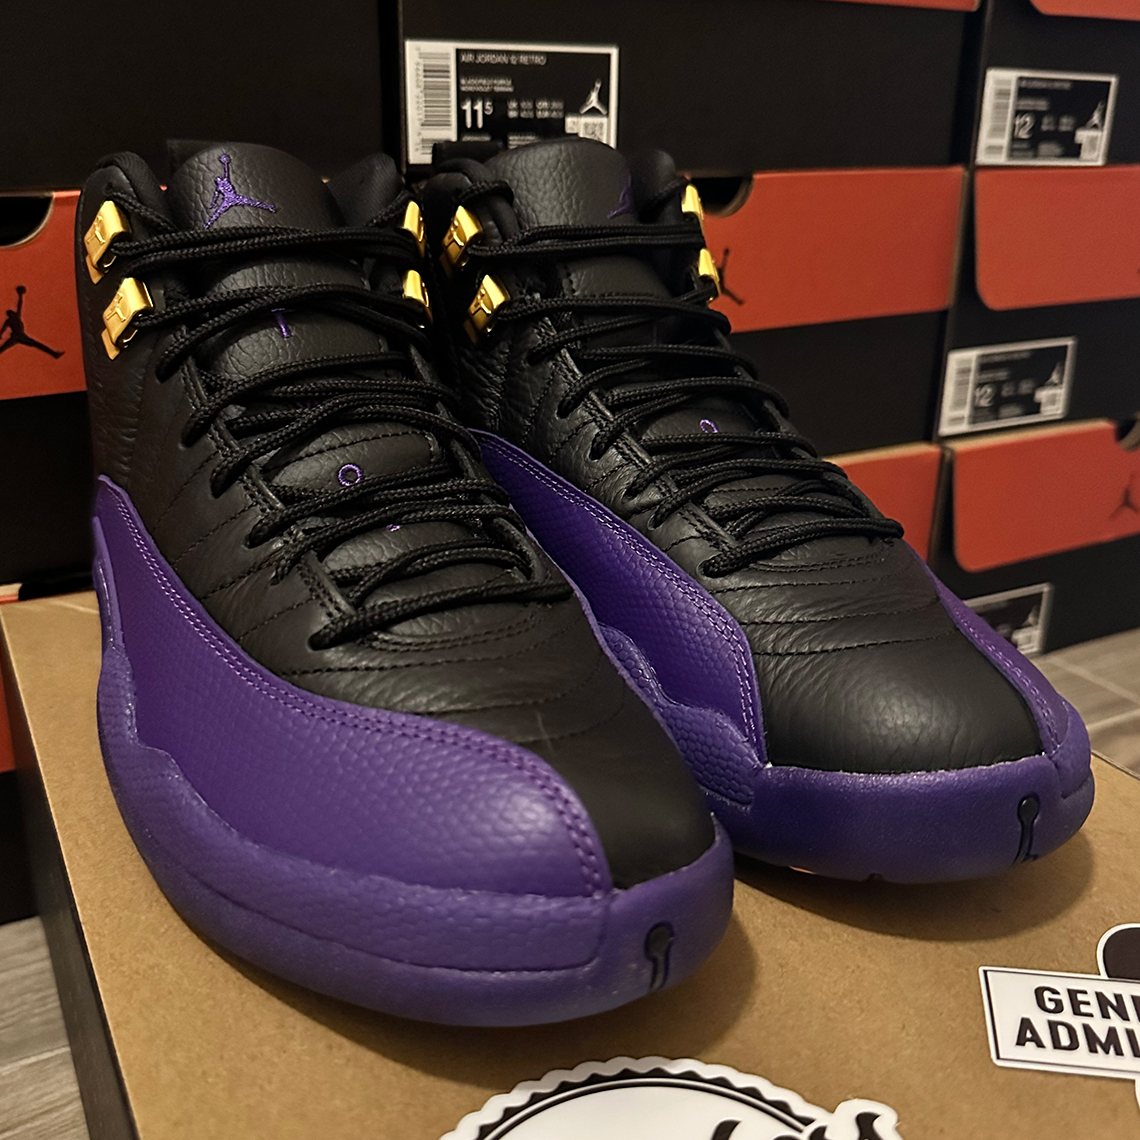 Air Jordan 12 "Black/Field Purple" CT8013057